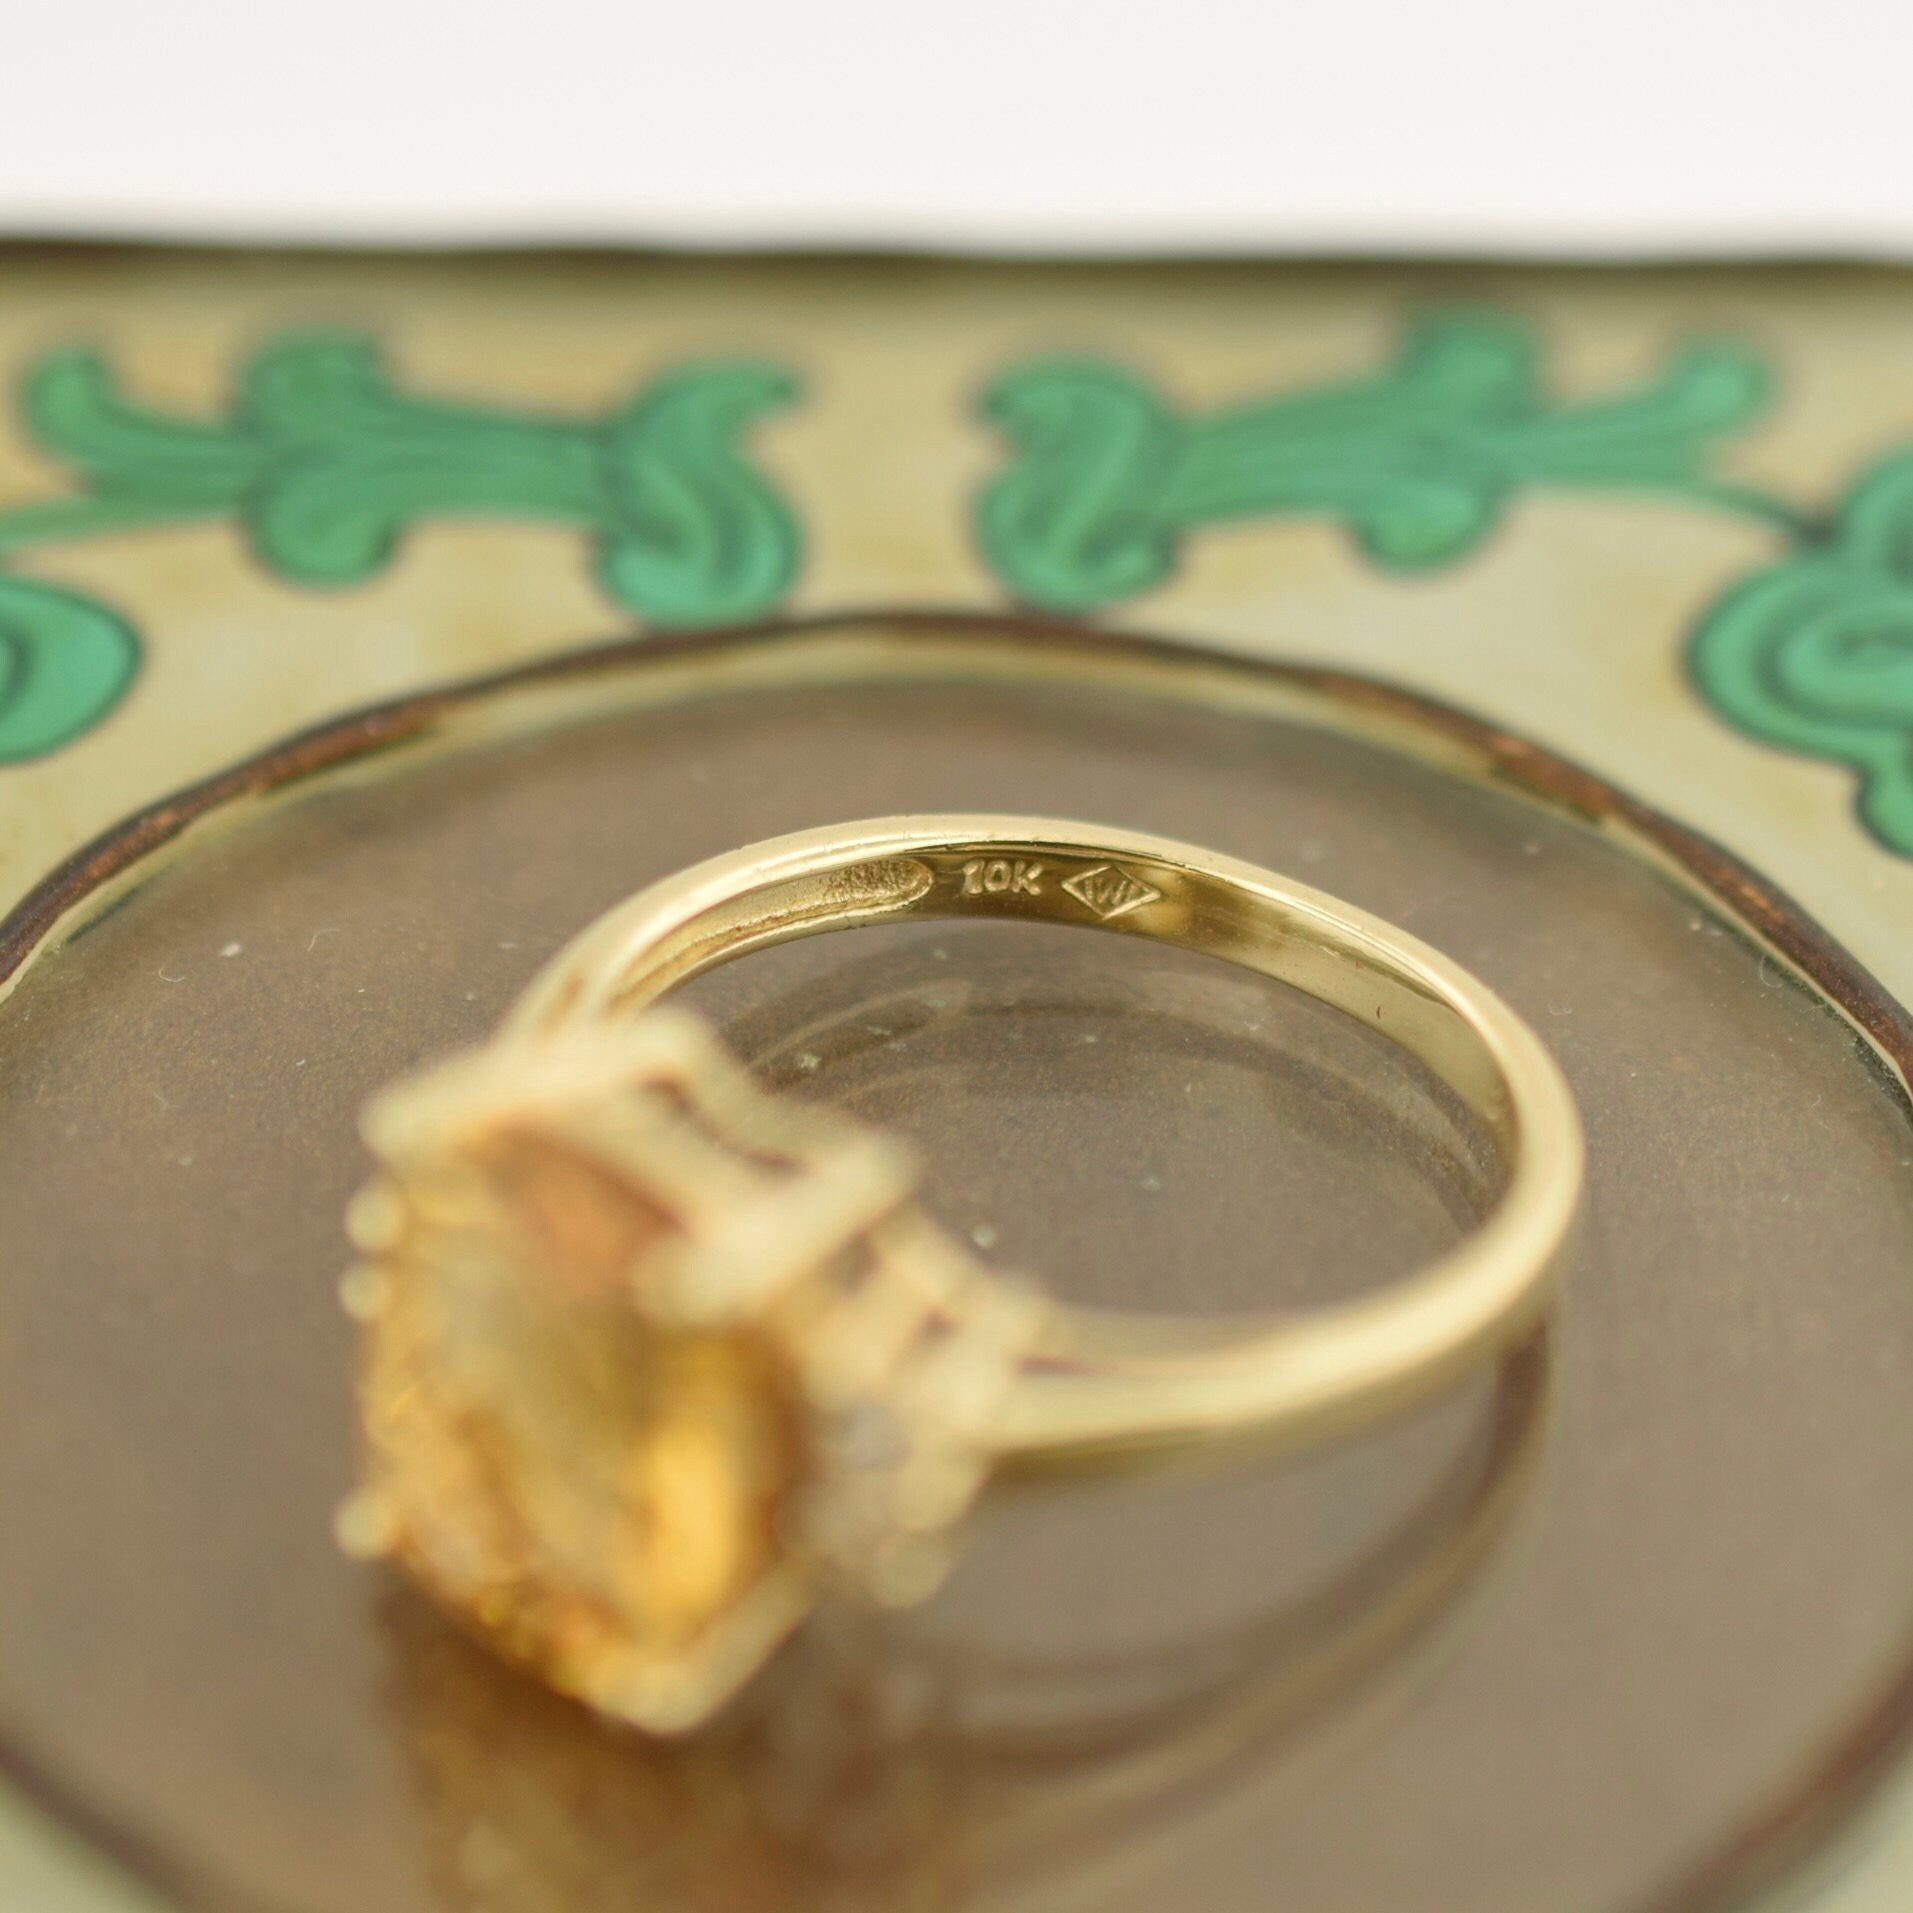 Vintage 10k Citrine Yellow Gold Ring Size 7.25 - Nice Size Statement Ring